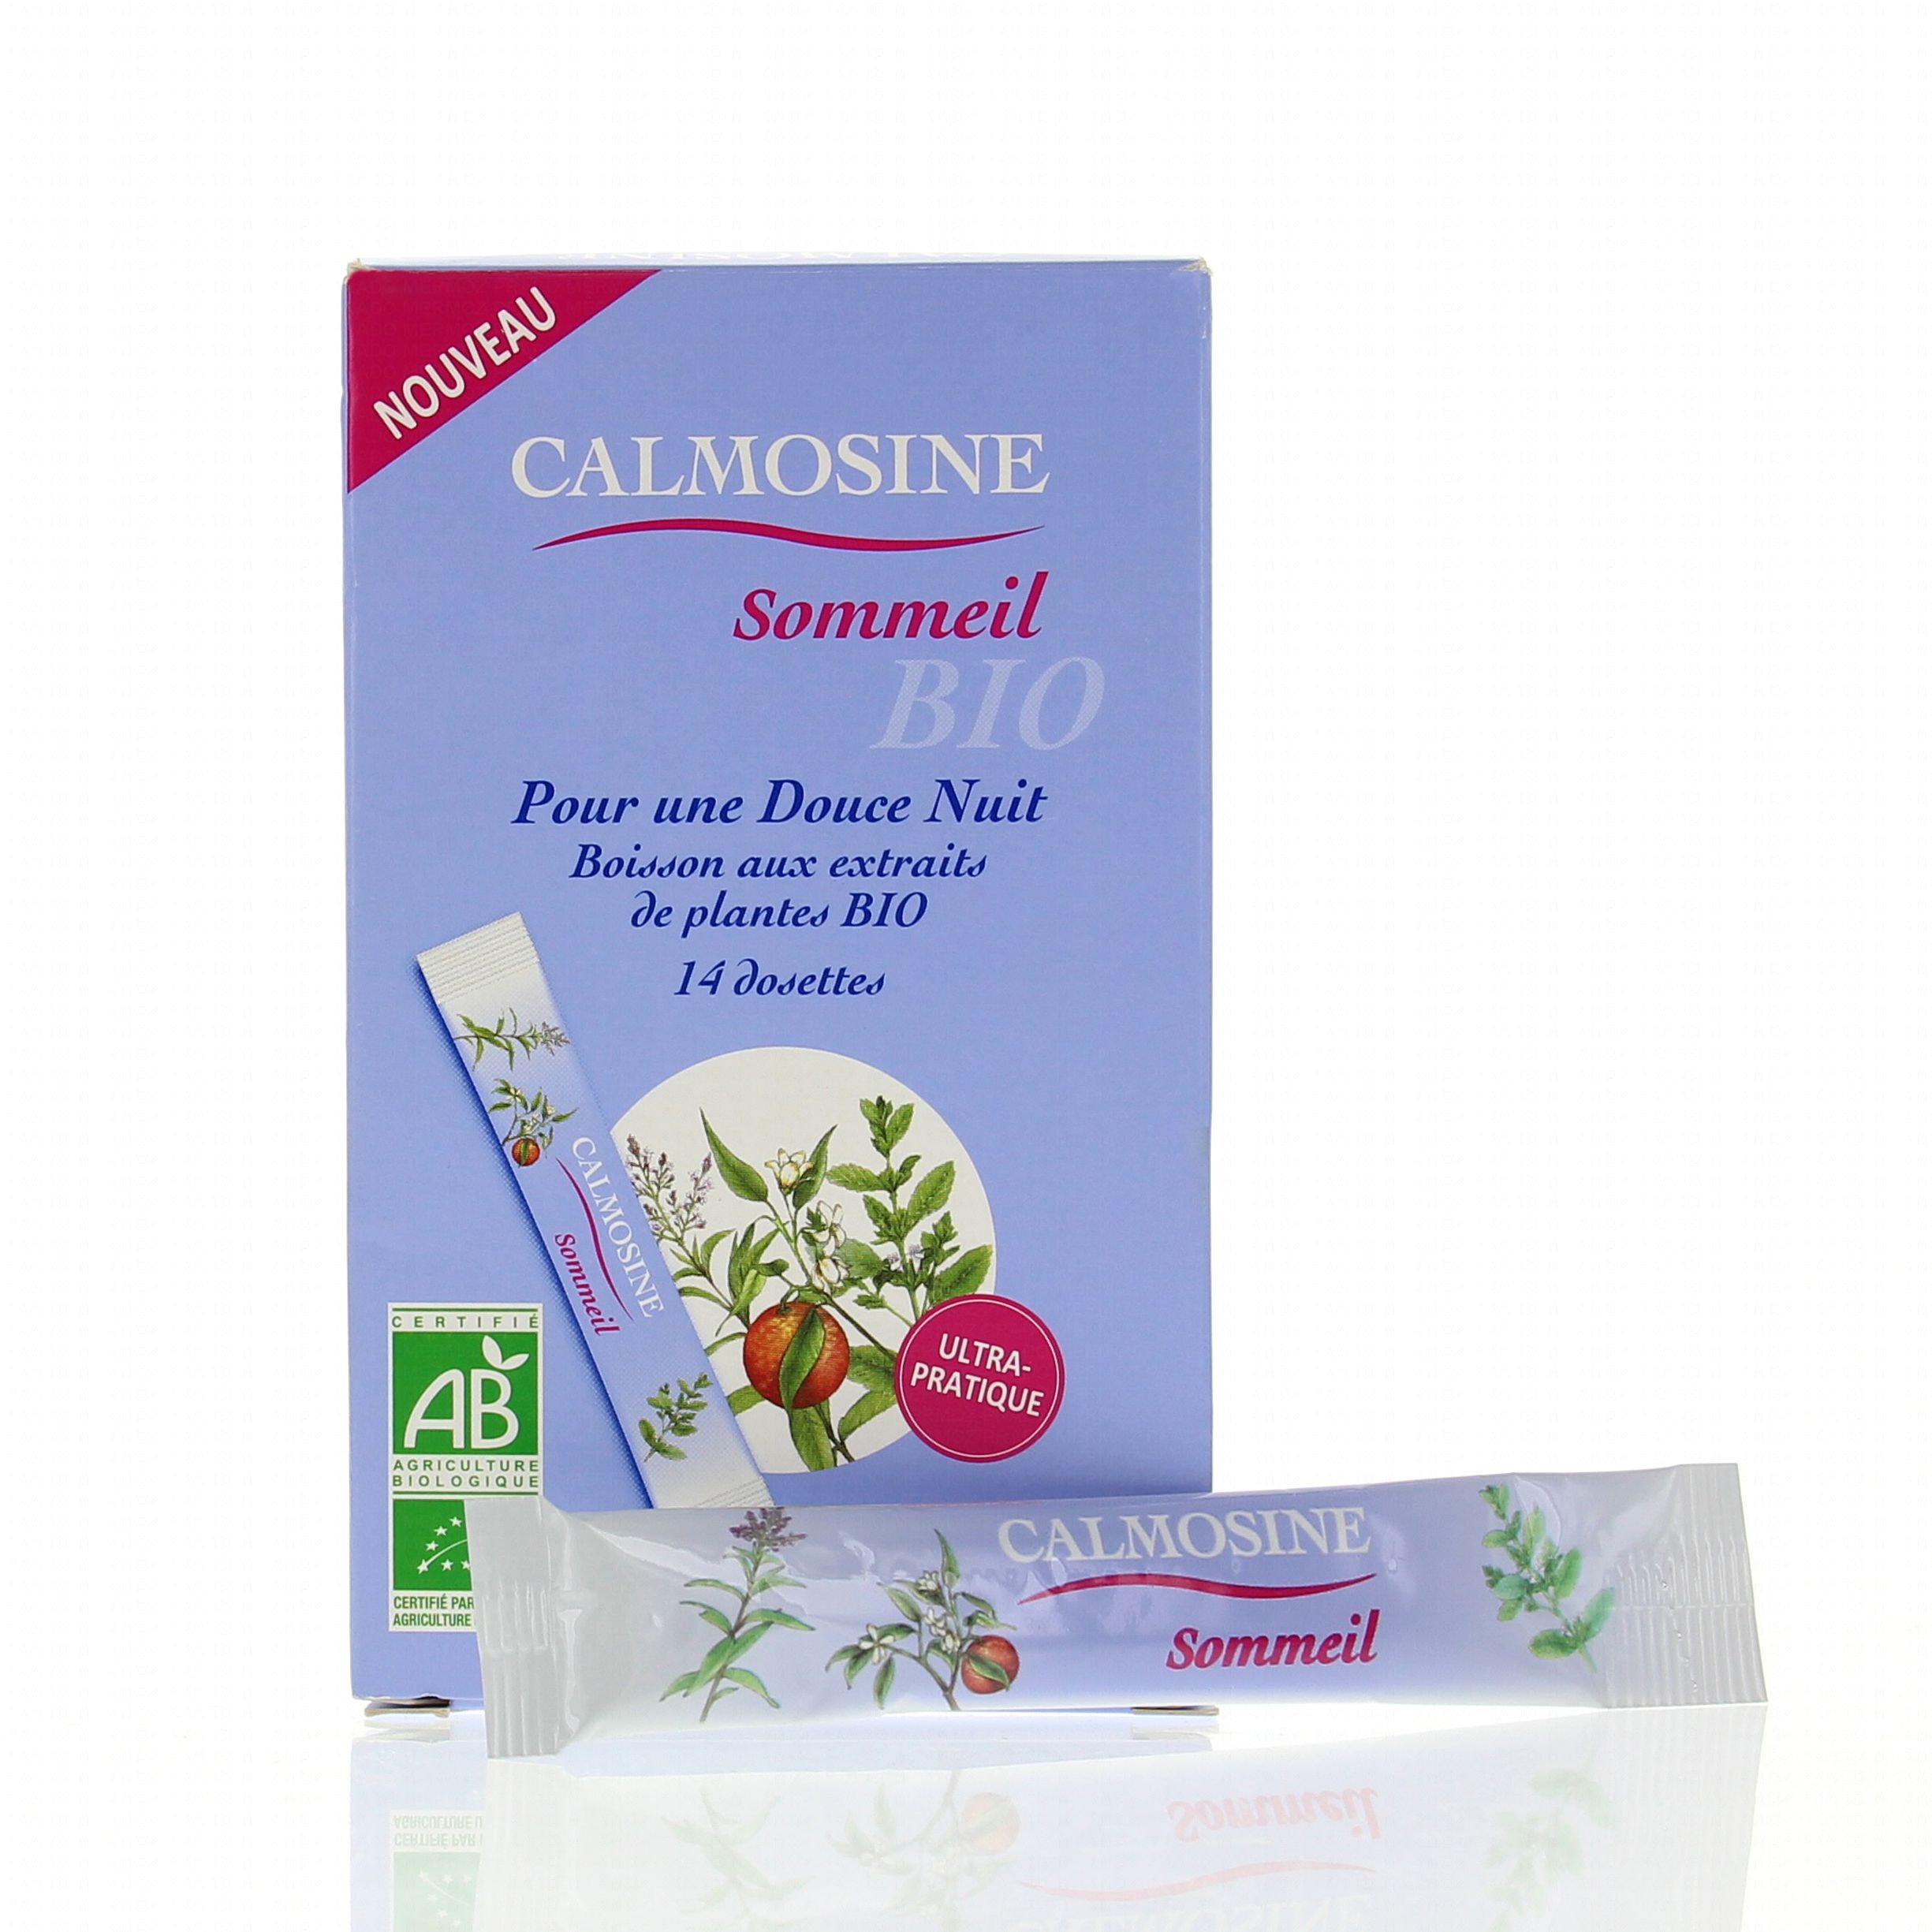 CALMOSINE Sommeil bio boîte de 14 dosettes de 10ml - Parapharmacie